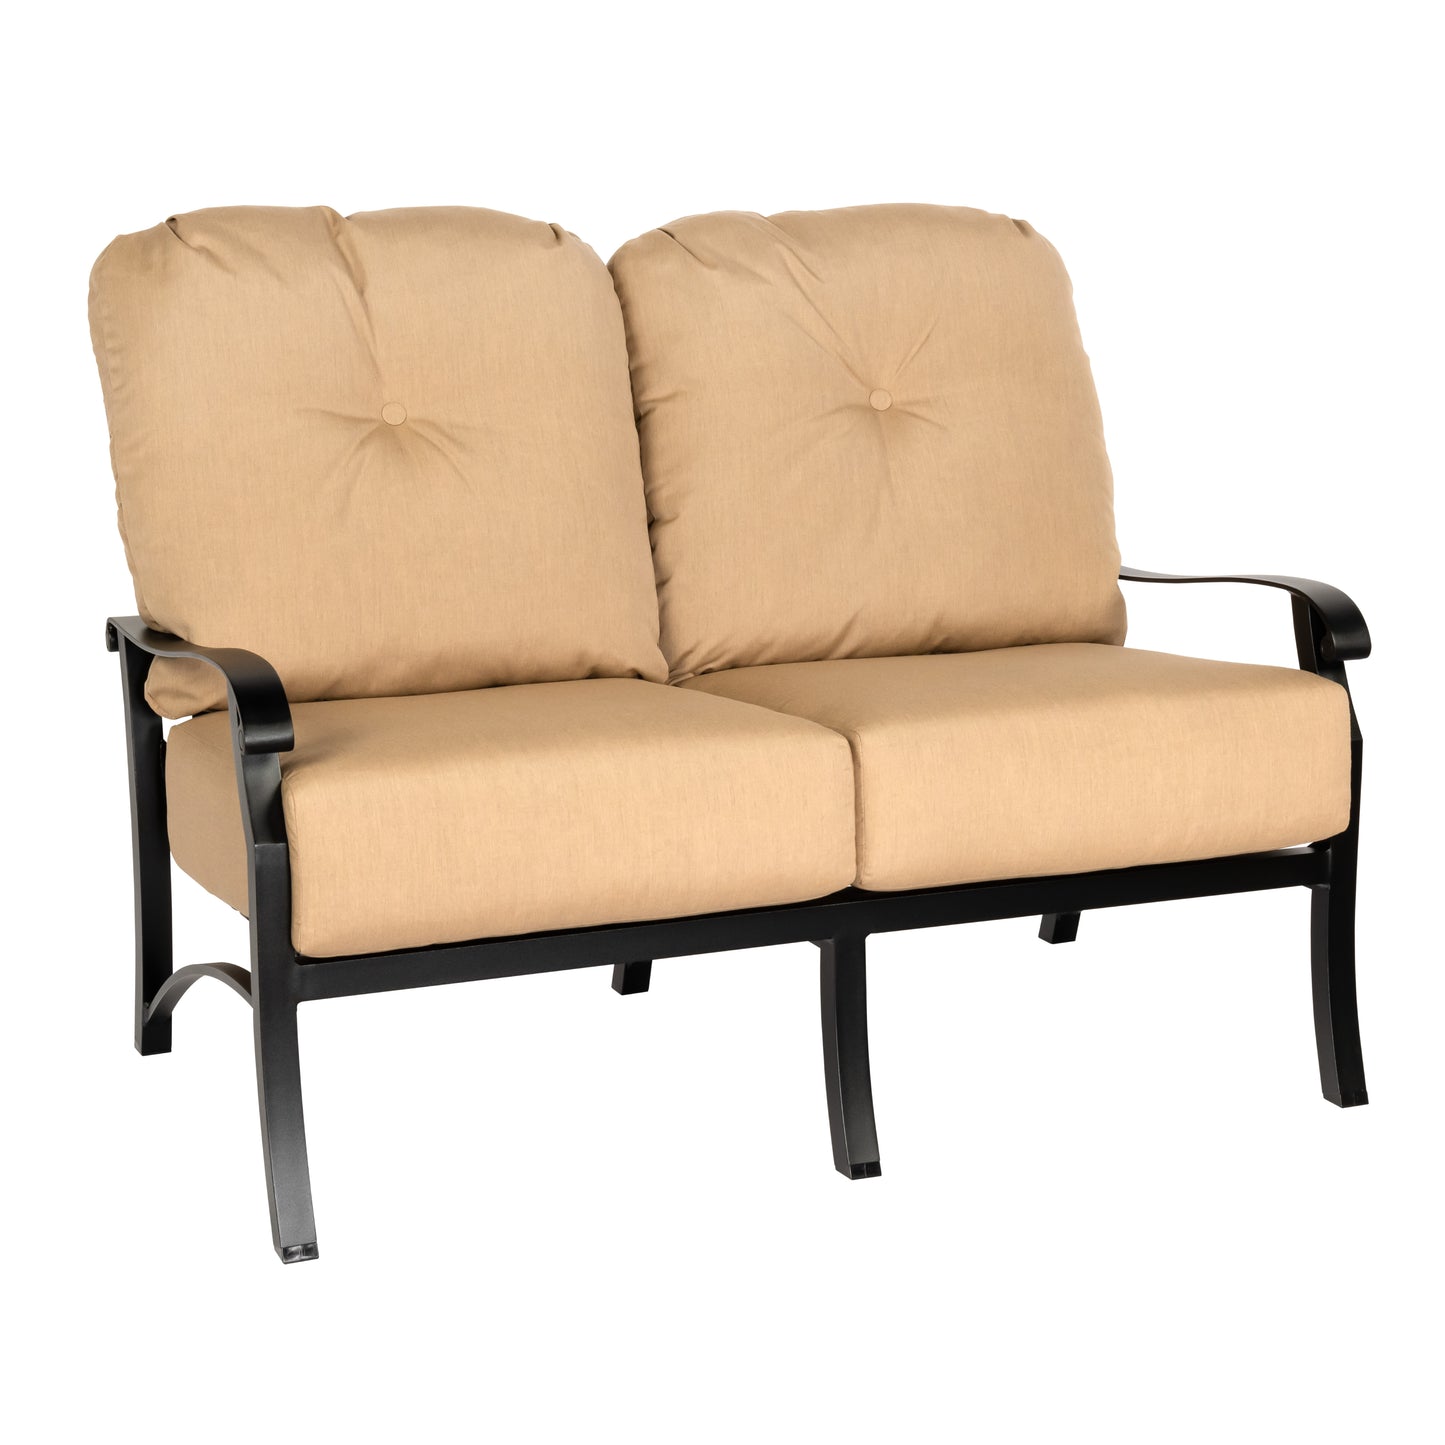 Woodard Cortland Cushion Love Seat 4Z0419 - Textured Black / Michelangelo Toast